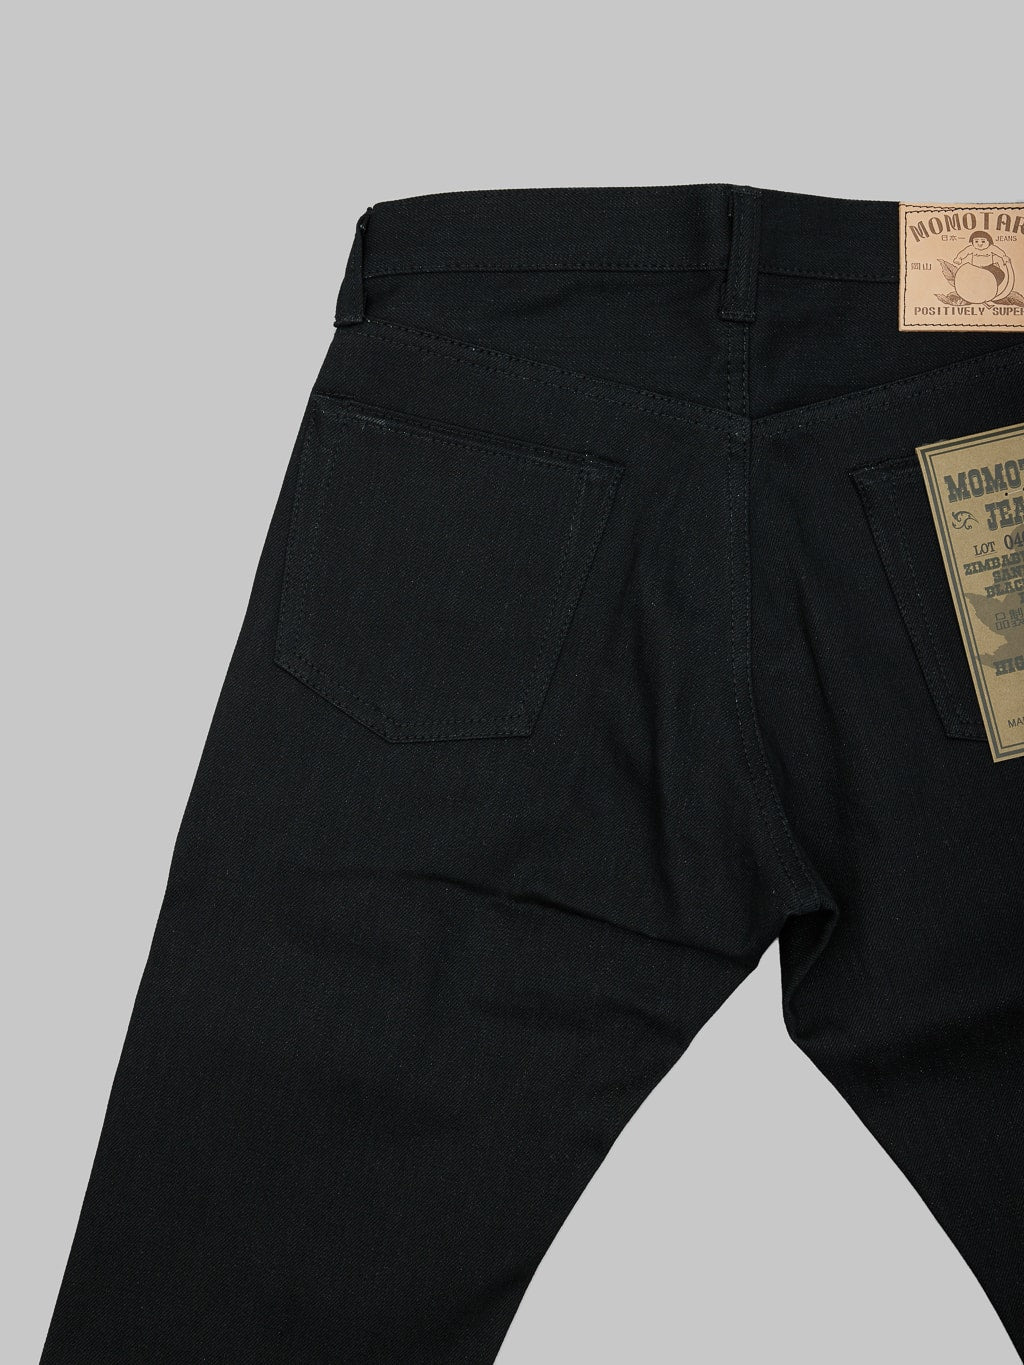 momotaro 0405b selvedge black denim high tapered jeans plain pocket